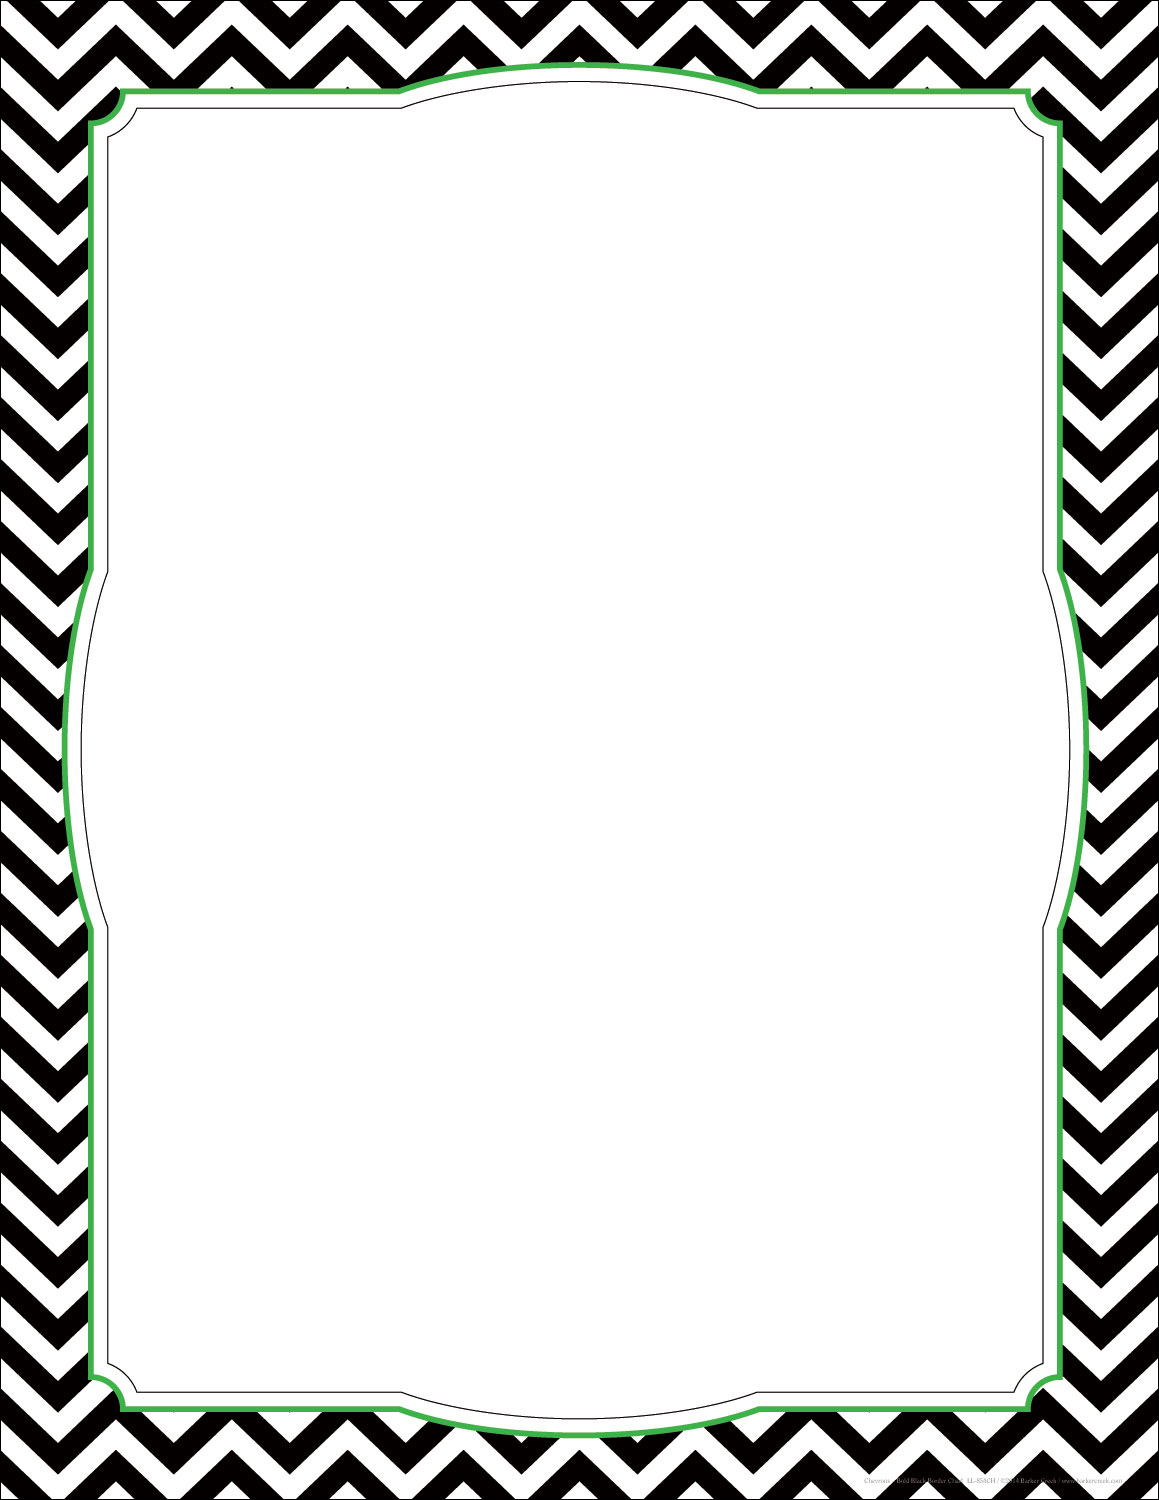 Black And White Chevron Paper - Clip Art Border